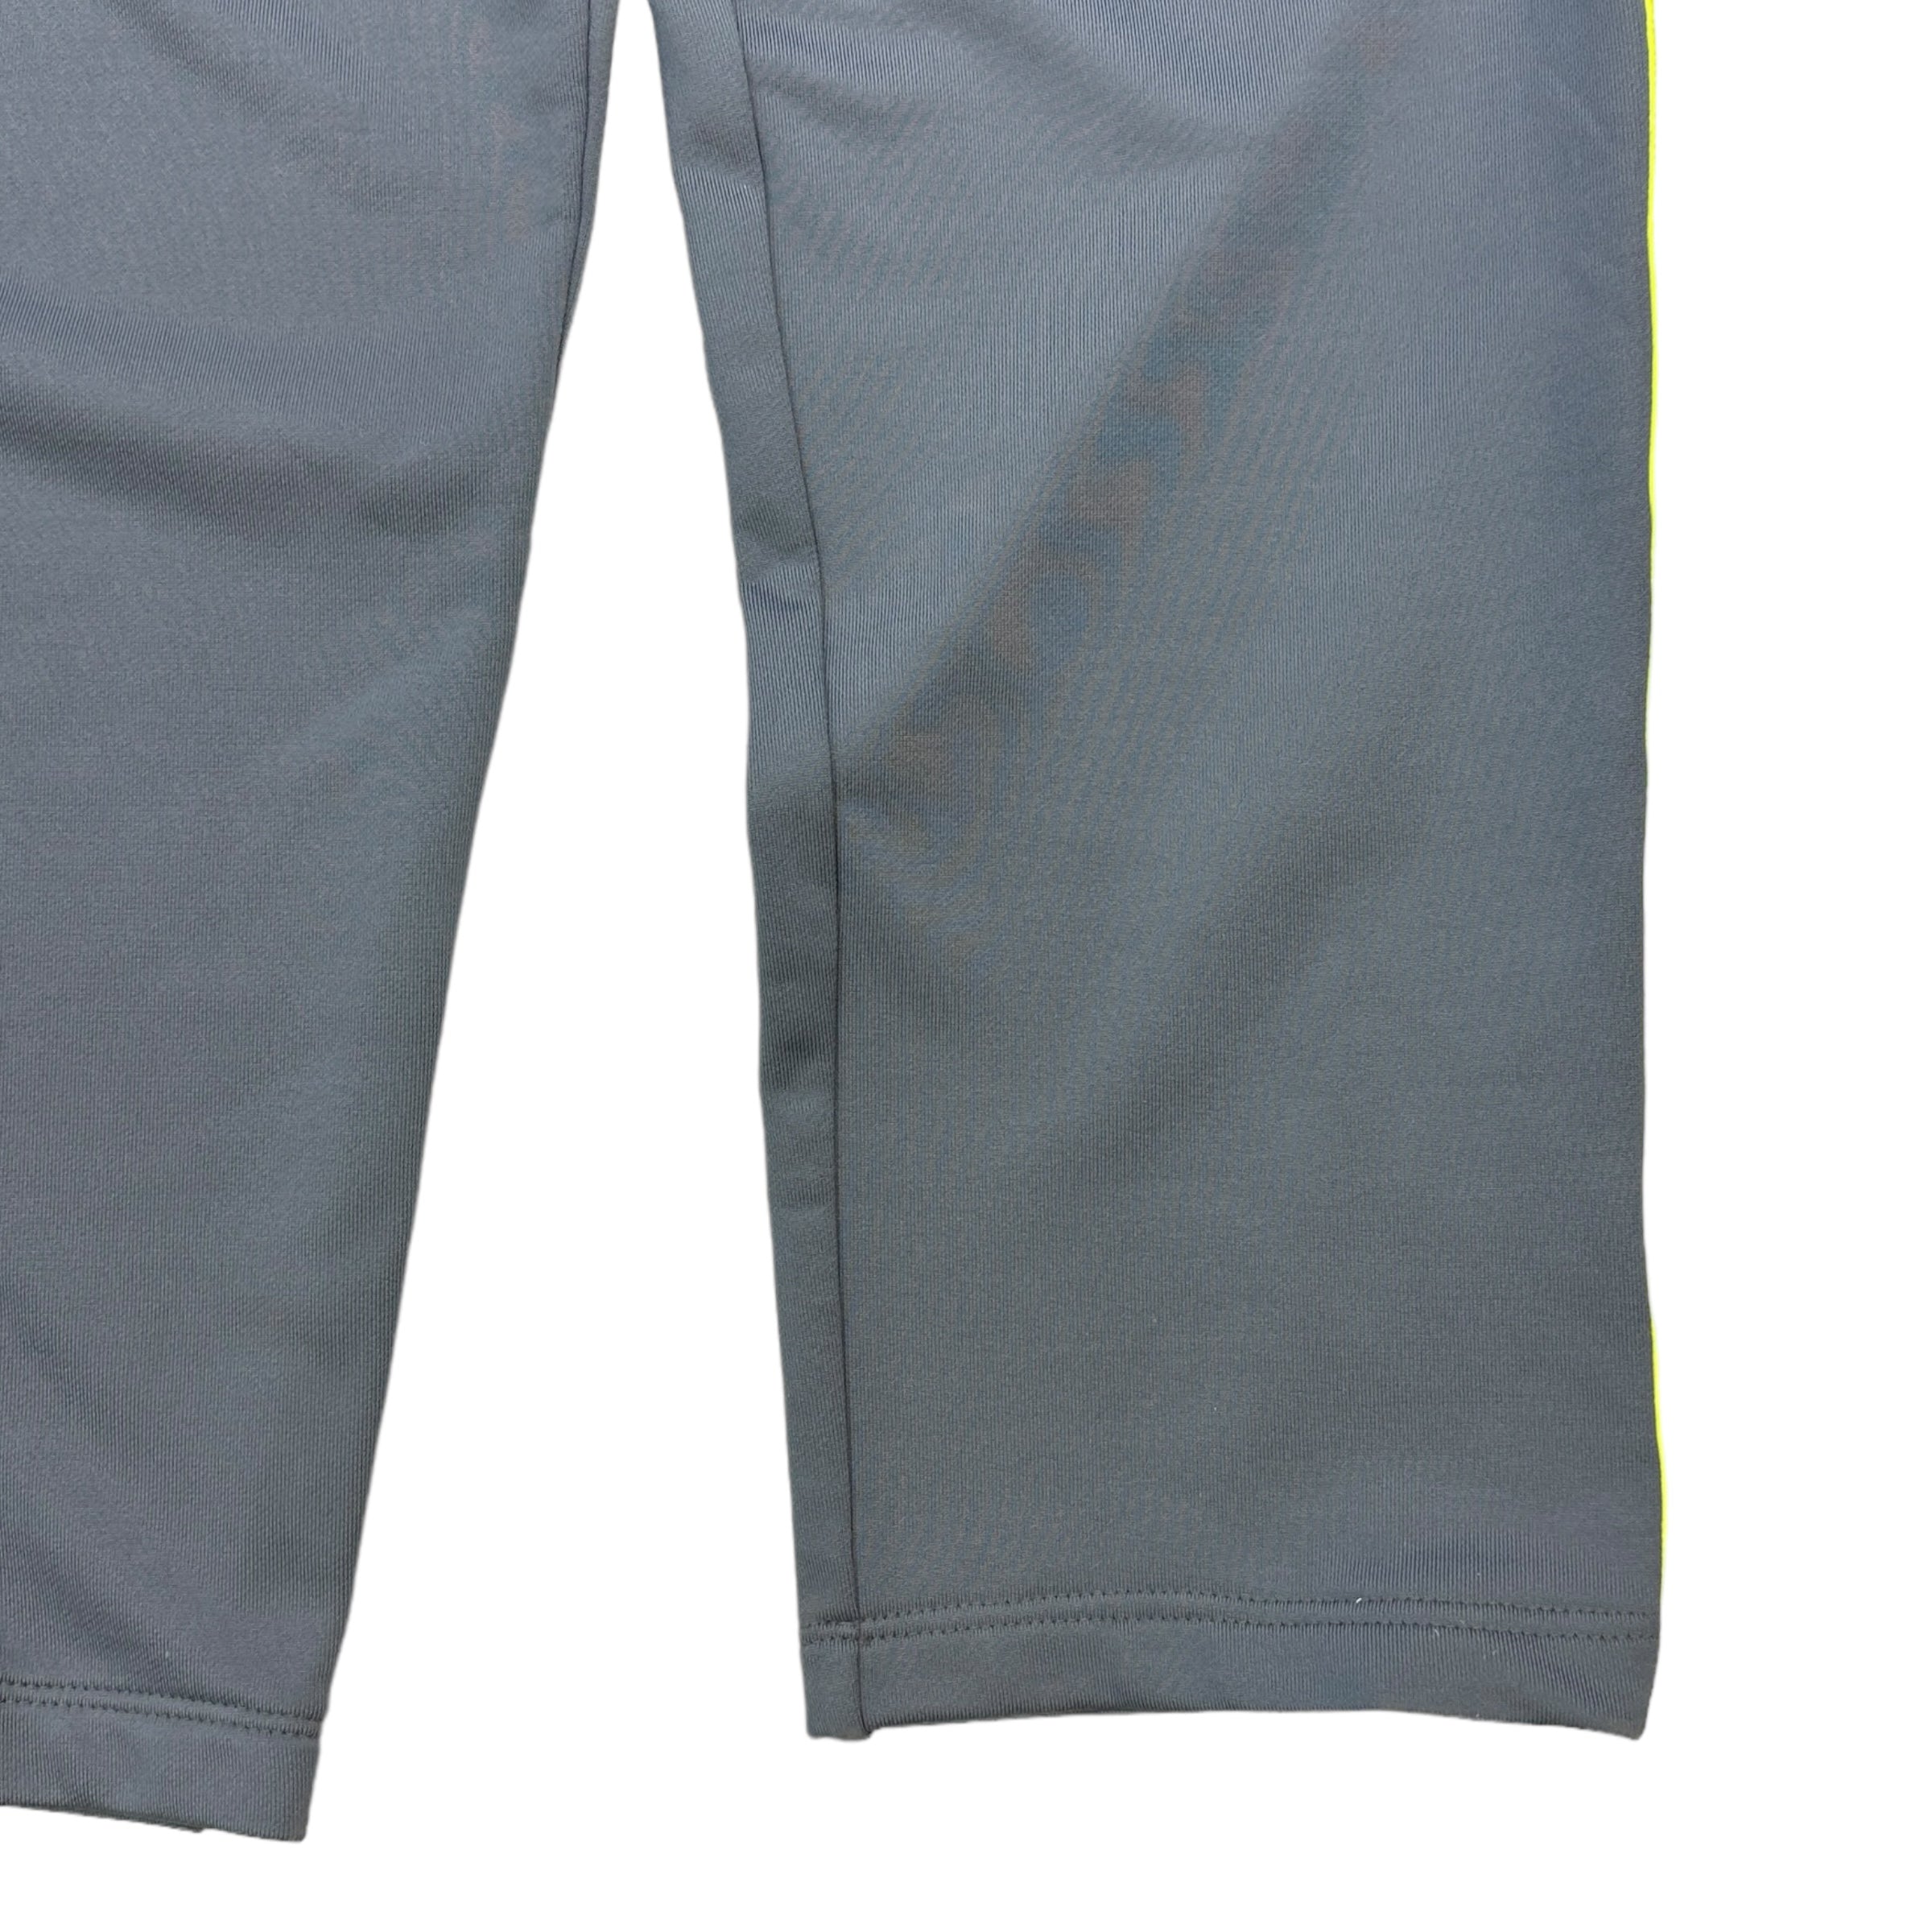 Balenciaga Sweat Pants Grey/Green